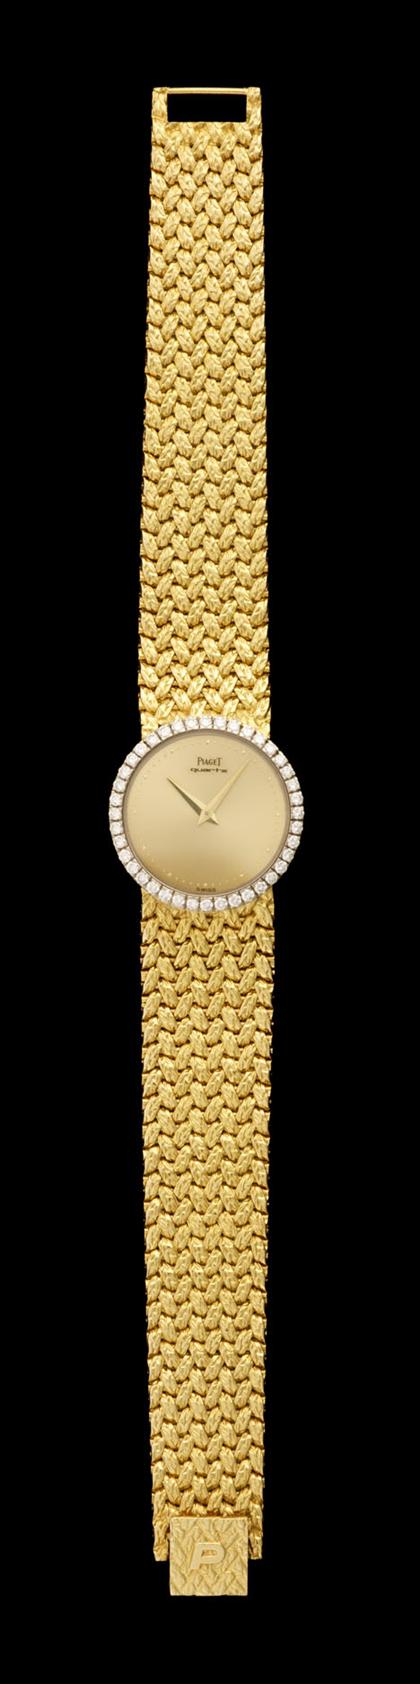 Lady s 18 karat yellow gold wristwatch  4be05